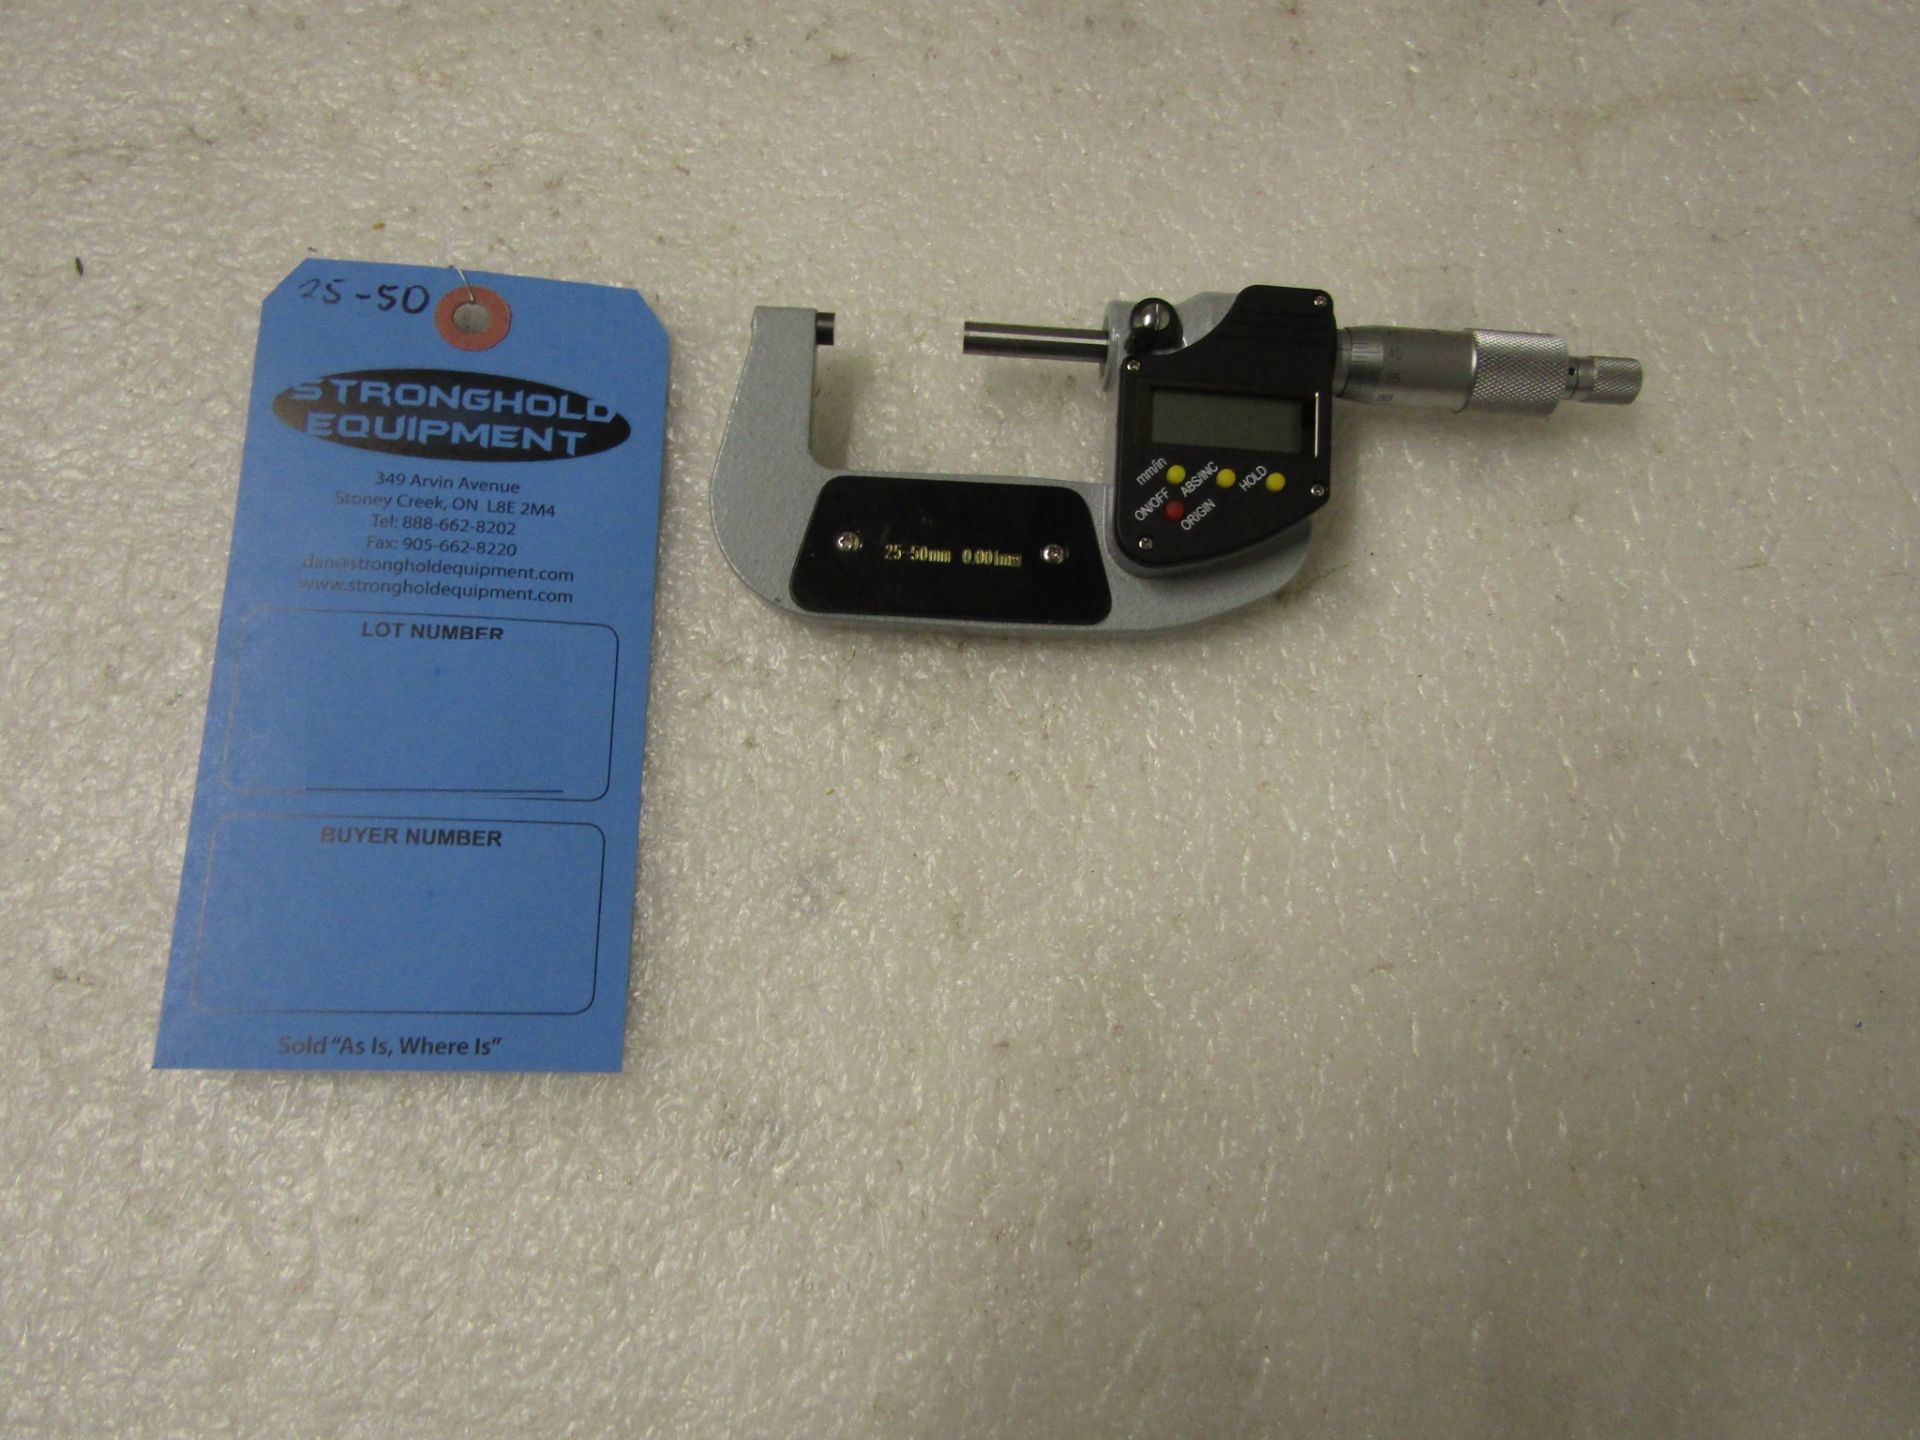 Mint 1-2" / 25-50mm Digital Micrometer in case BRAND NEW